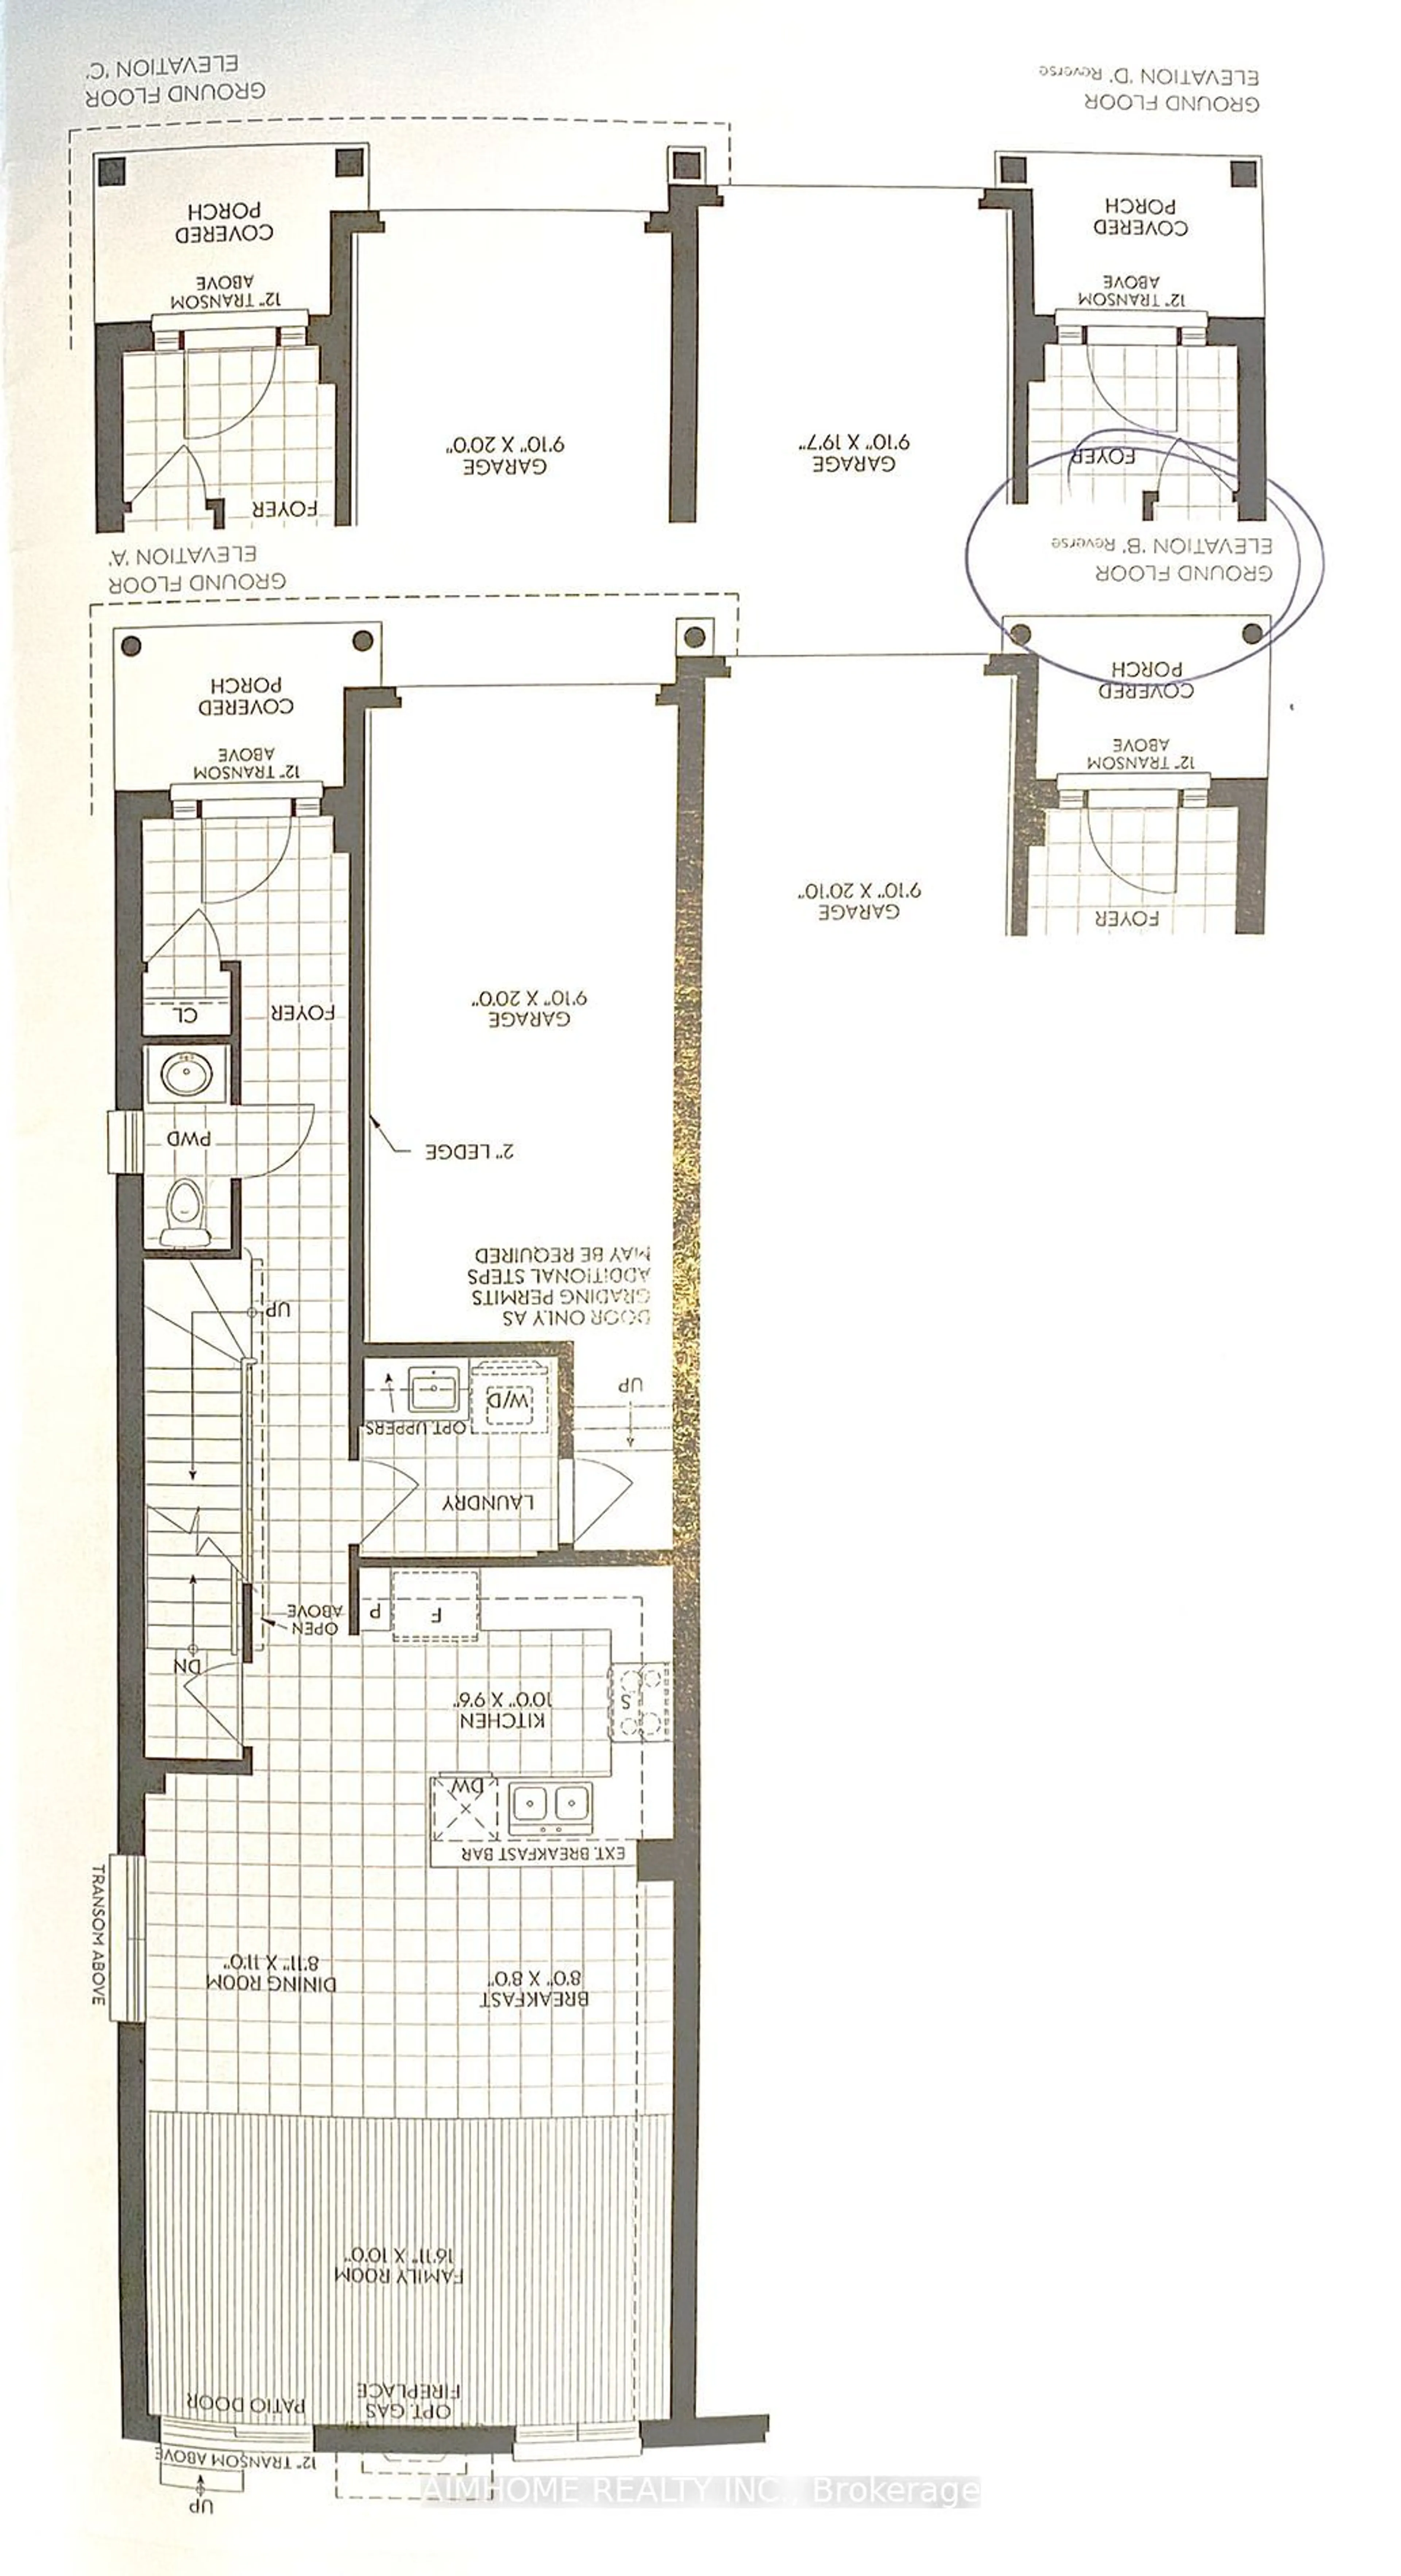 Floor plan for 11 Kester Crt, East Gwillimbury Ontario L9N 0P3